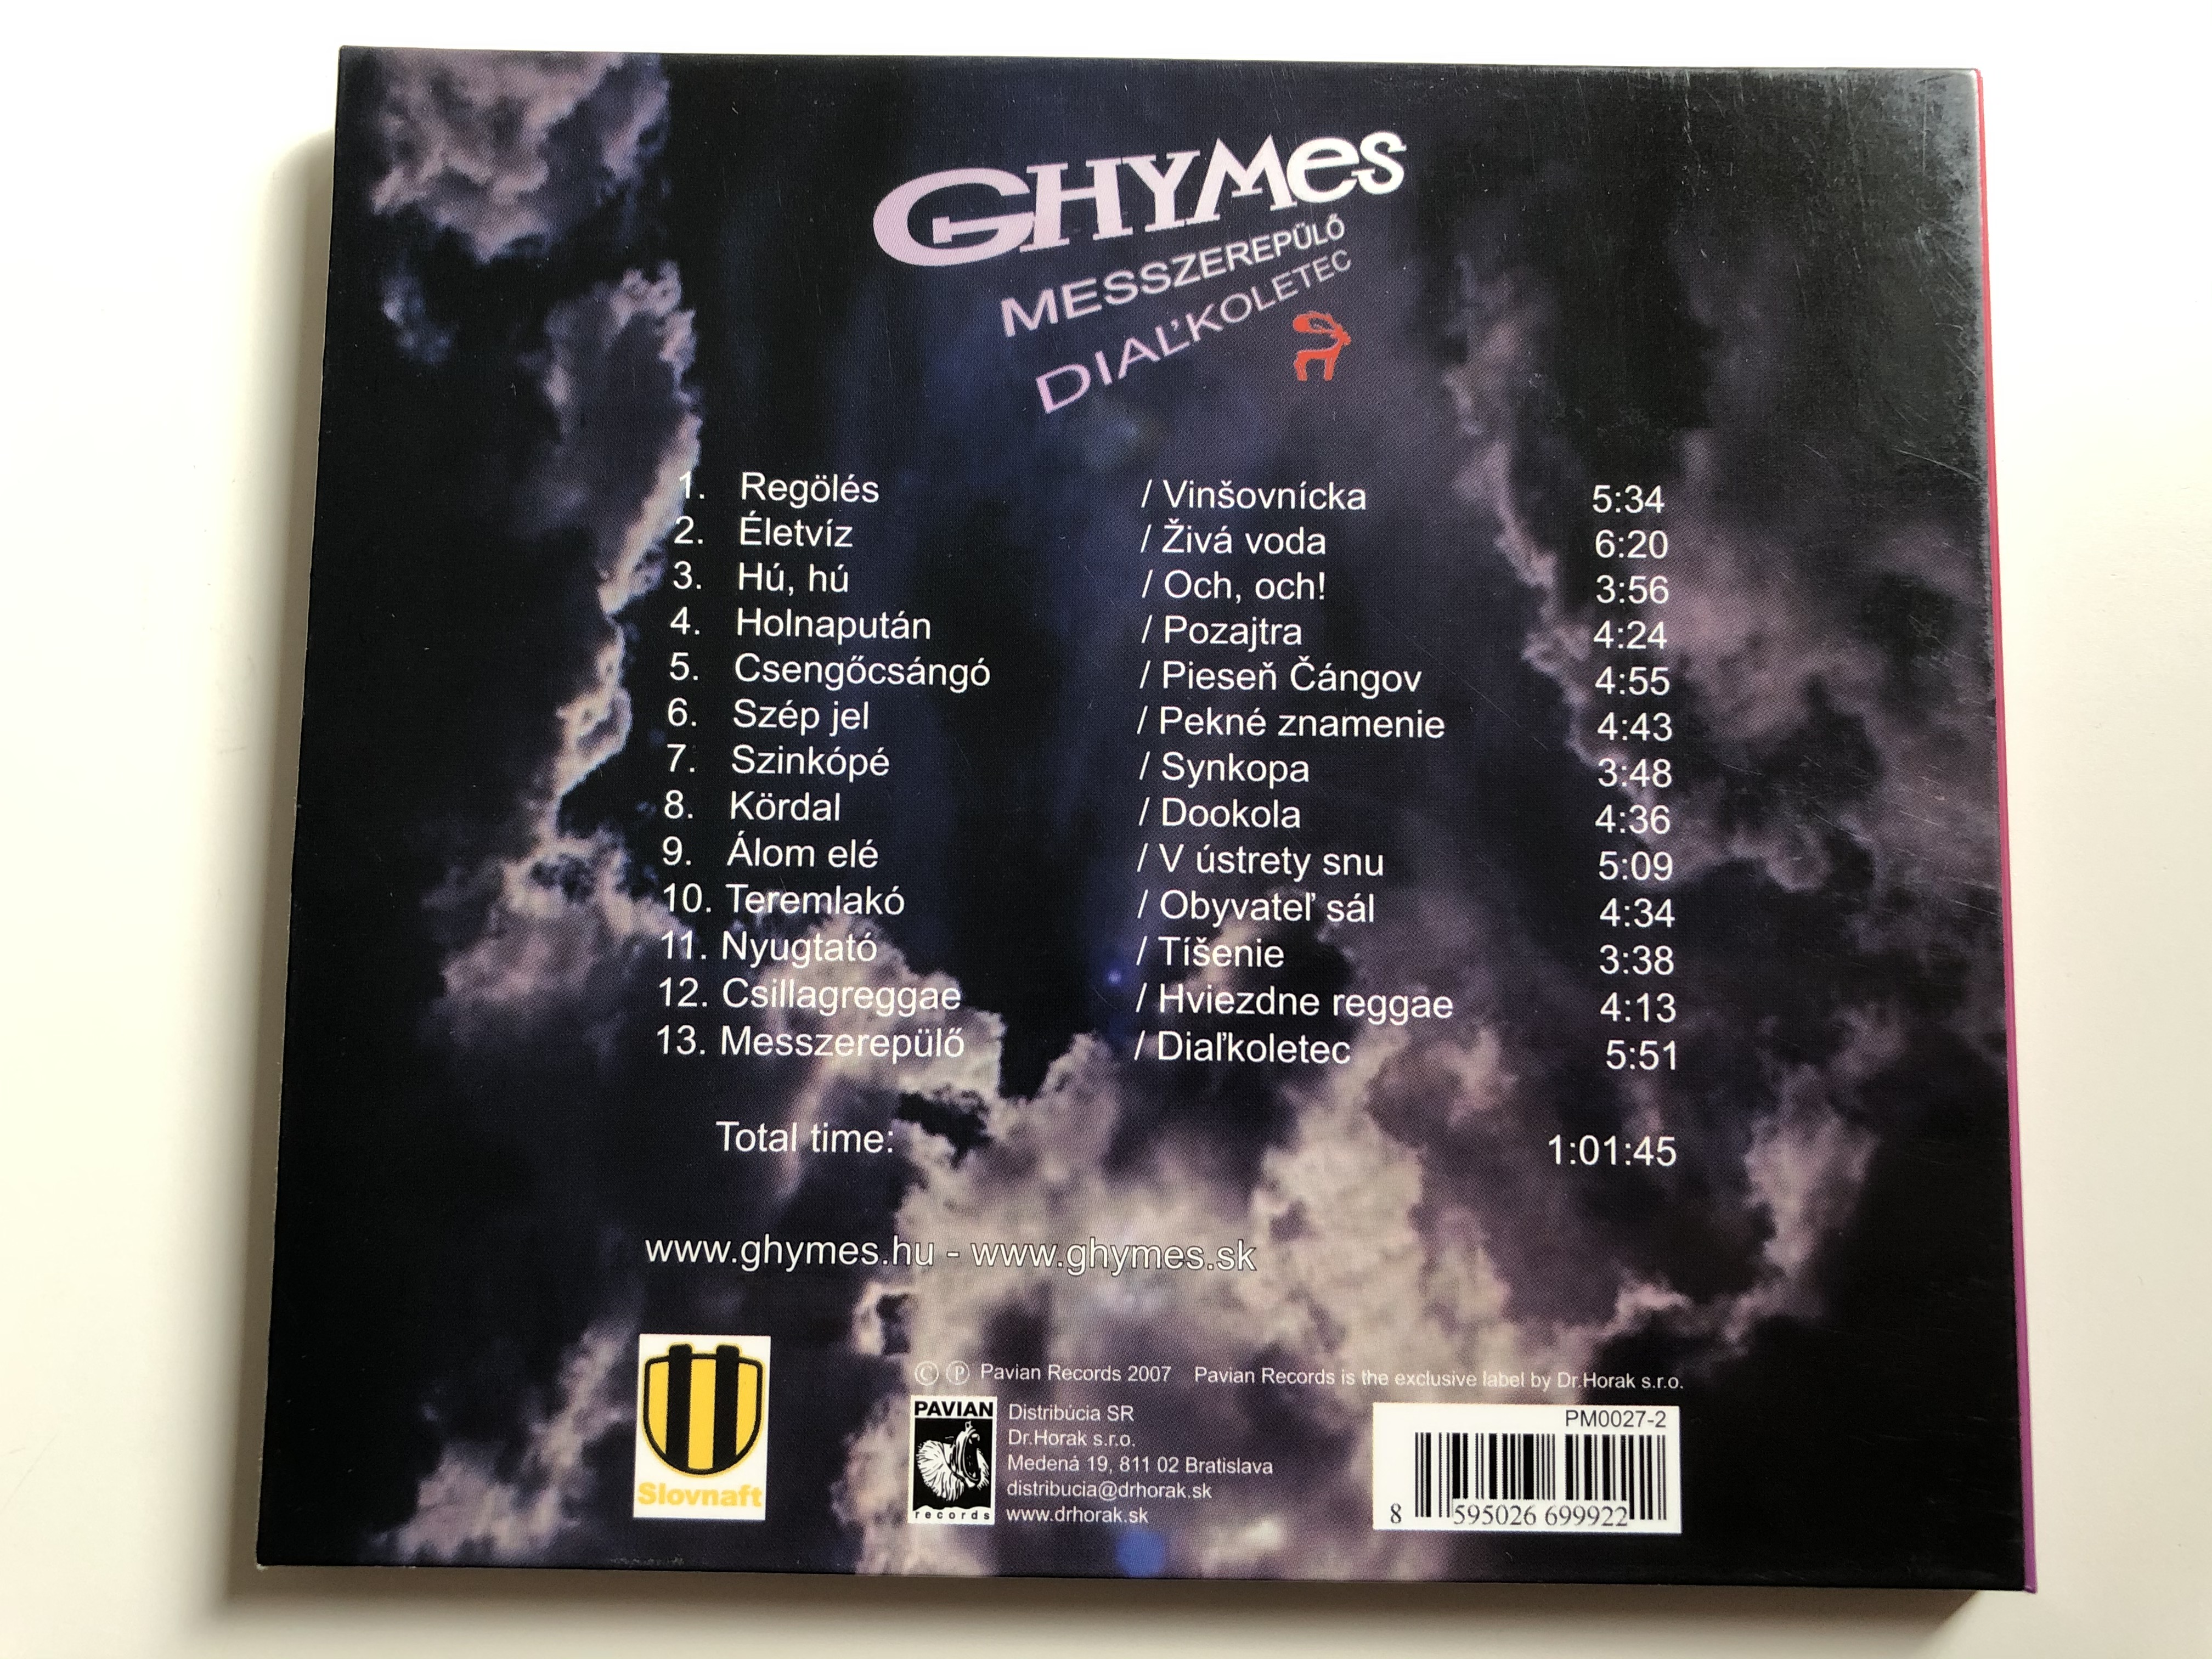 ghymes-messzerep-l-dia-koletec-pavian-records-audio-cd-2007-pm0027-2-8-.jpg